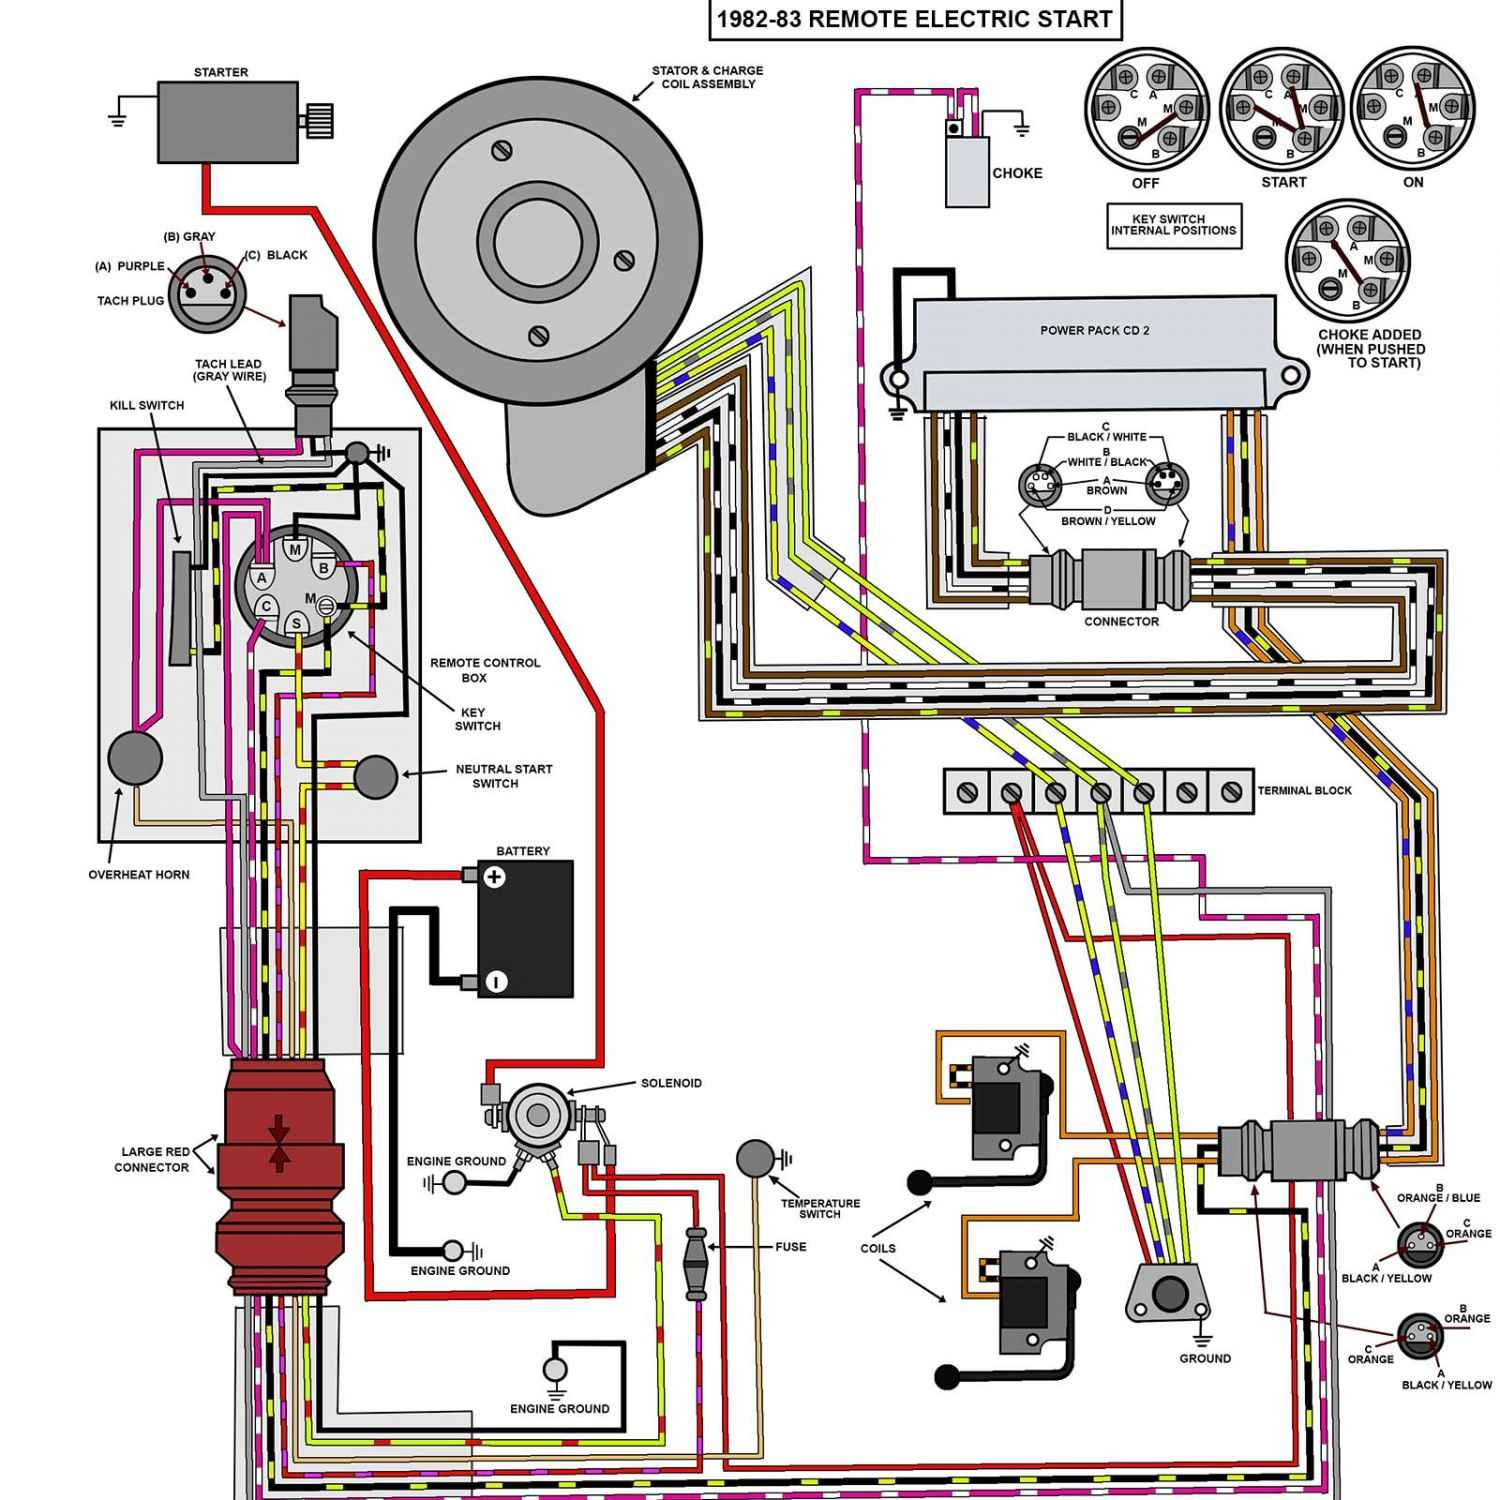 1992 Evinrude Wiring Diagram | Manual E-Books - Evinrude Power Pack Wiring Diagram